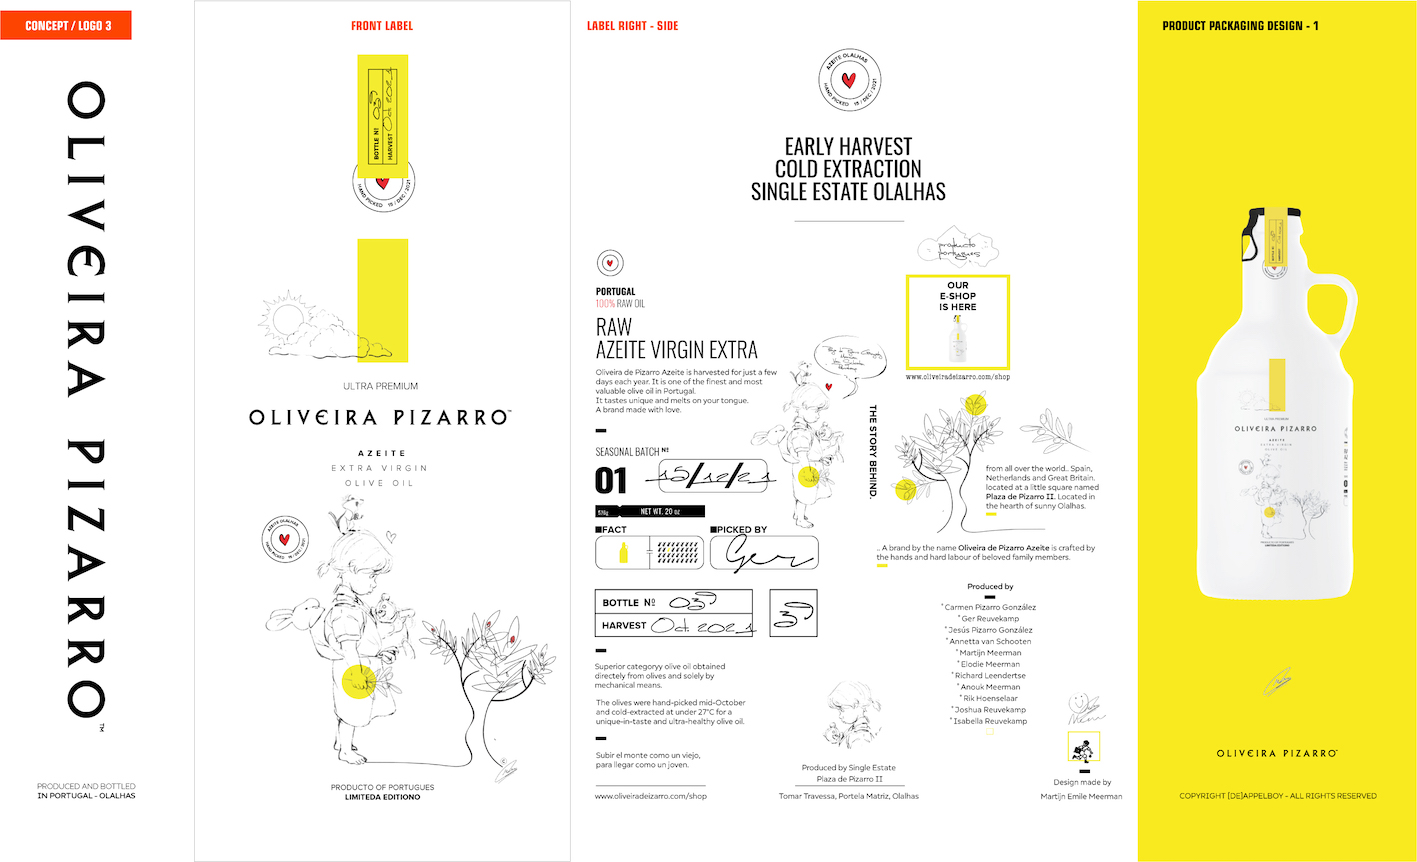 Oliveira de Pizarro Azeite - packaging Brand Identity